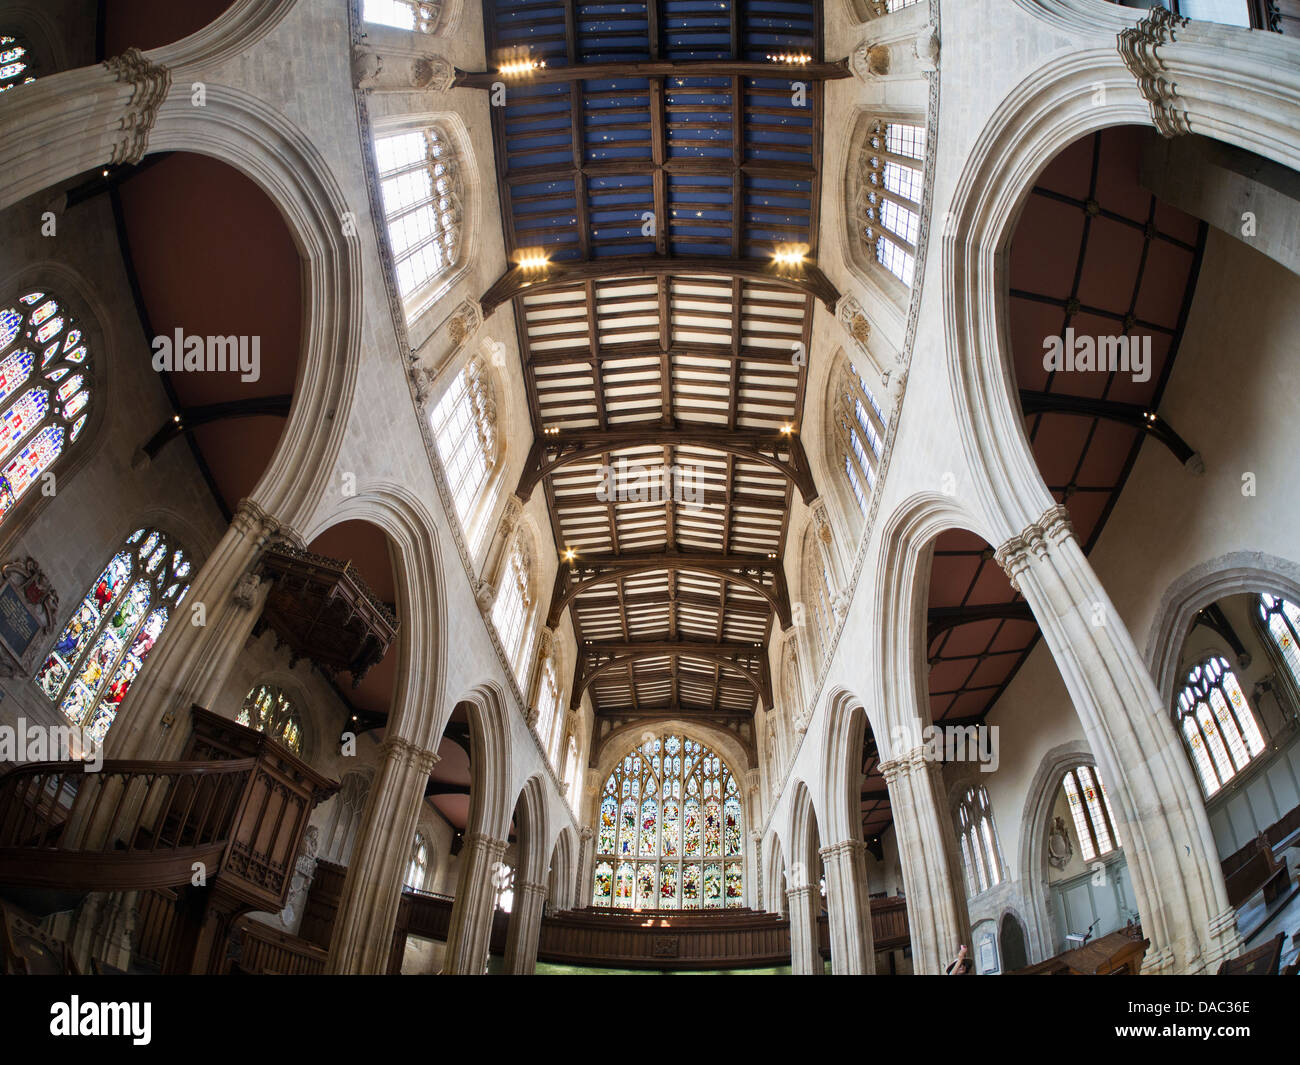 El interior de la iglesia de Saint Mary's, Oxford - fisheye View 1 Foto de stock